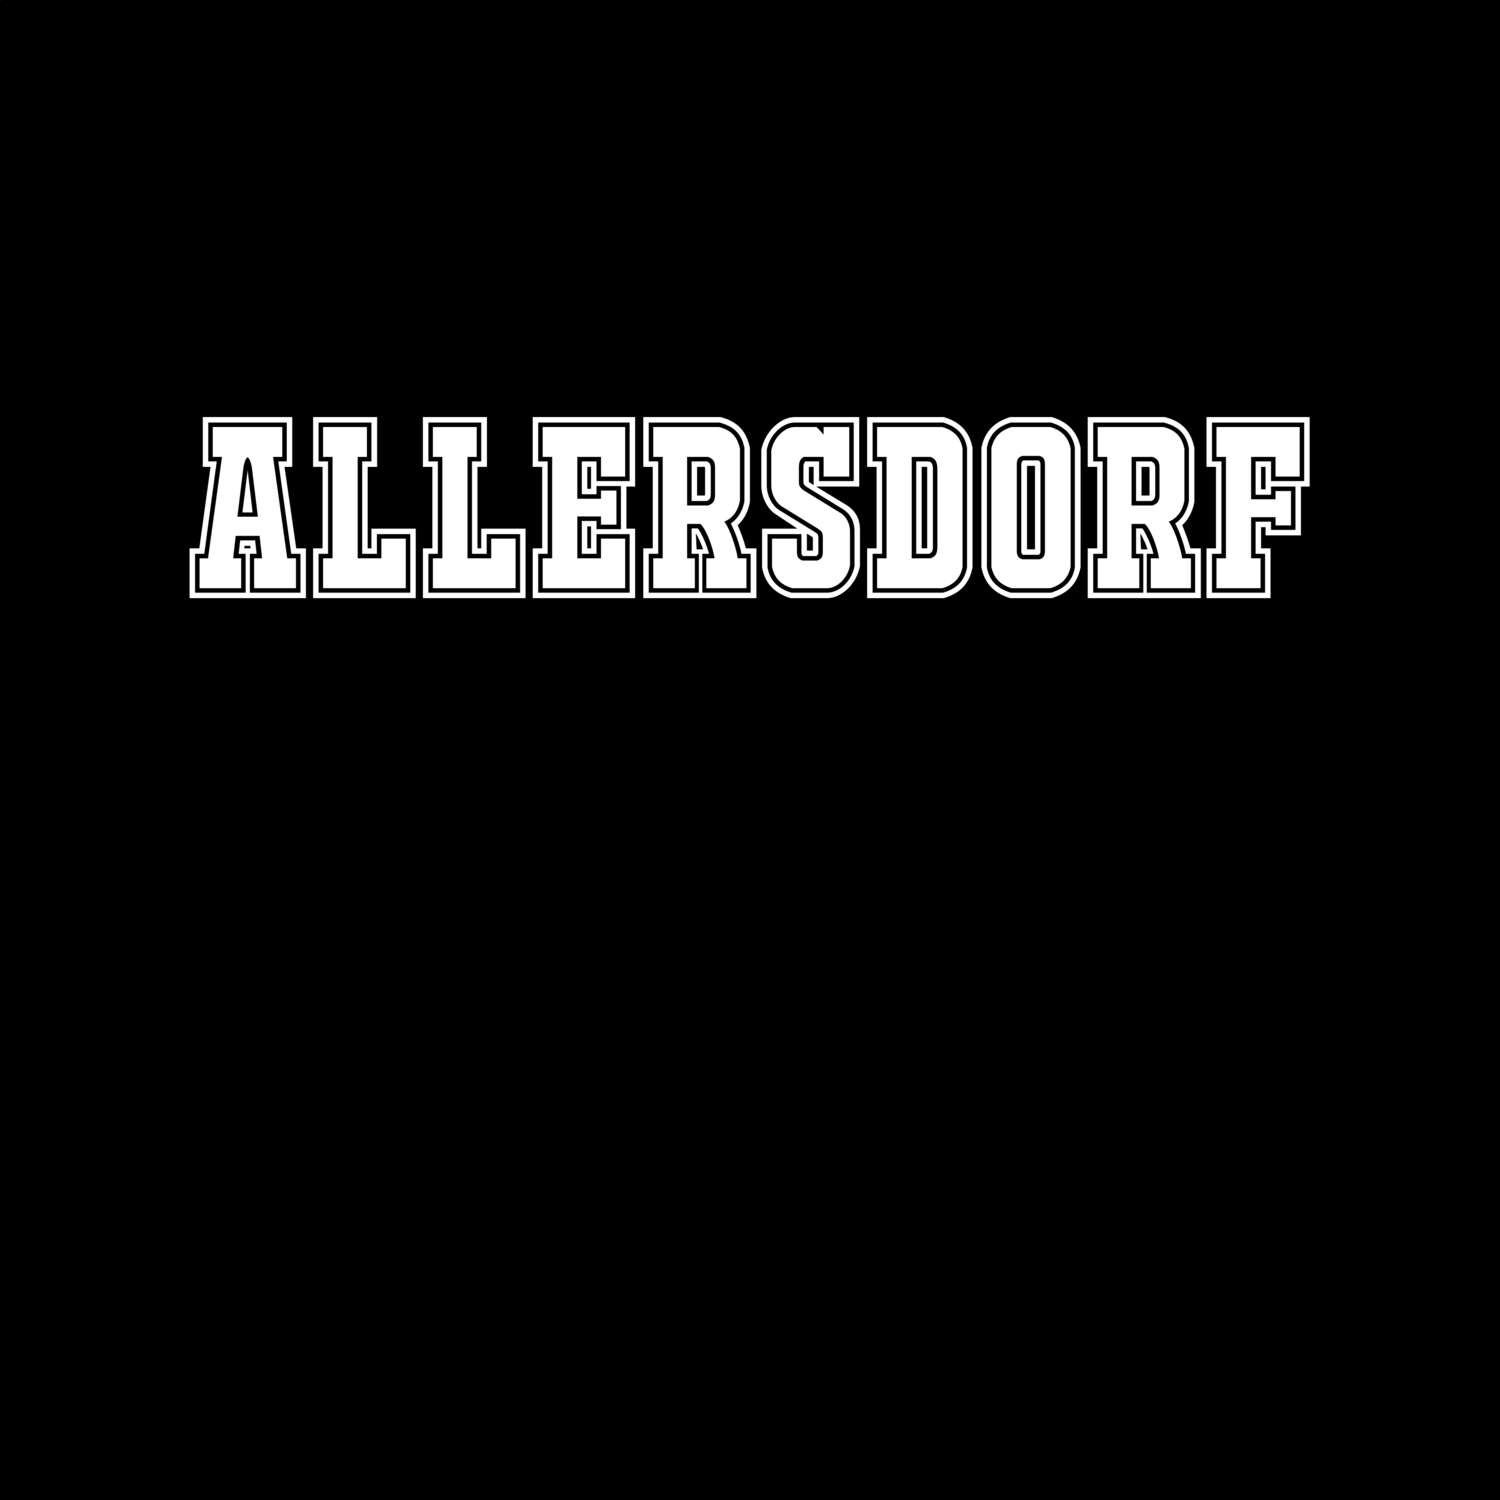 Allersdorf T-Shirt »Classic«